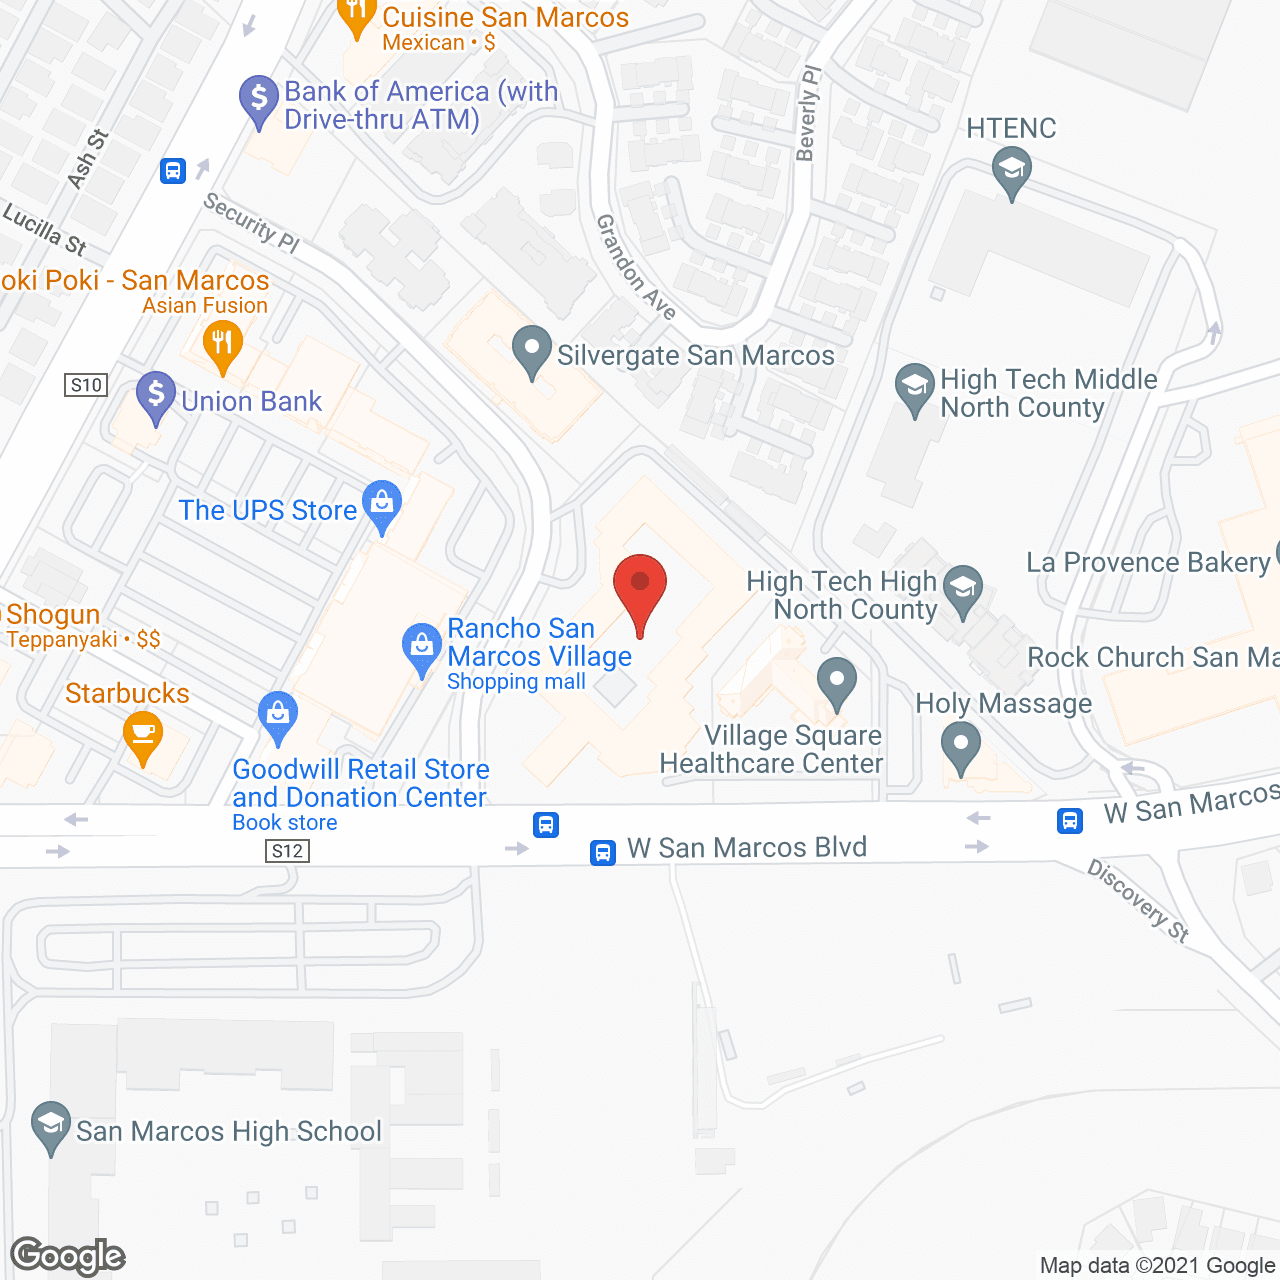 Brookdale San Marcos in google map